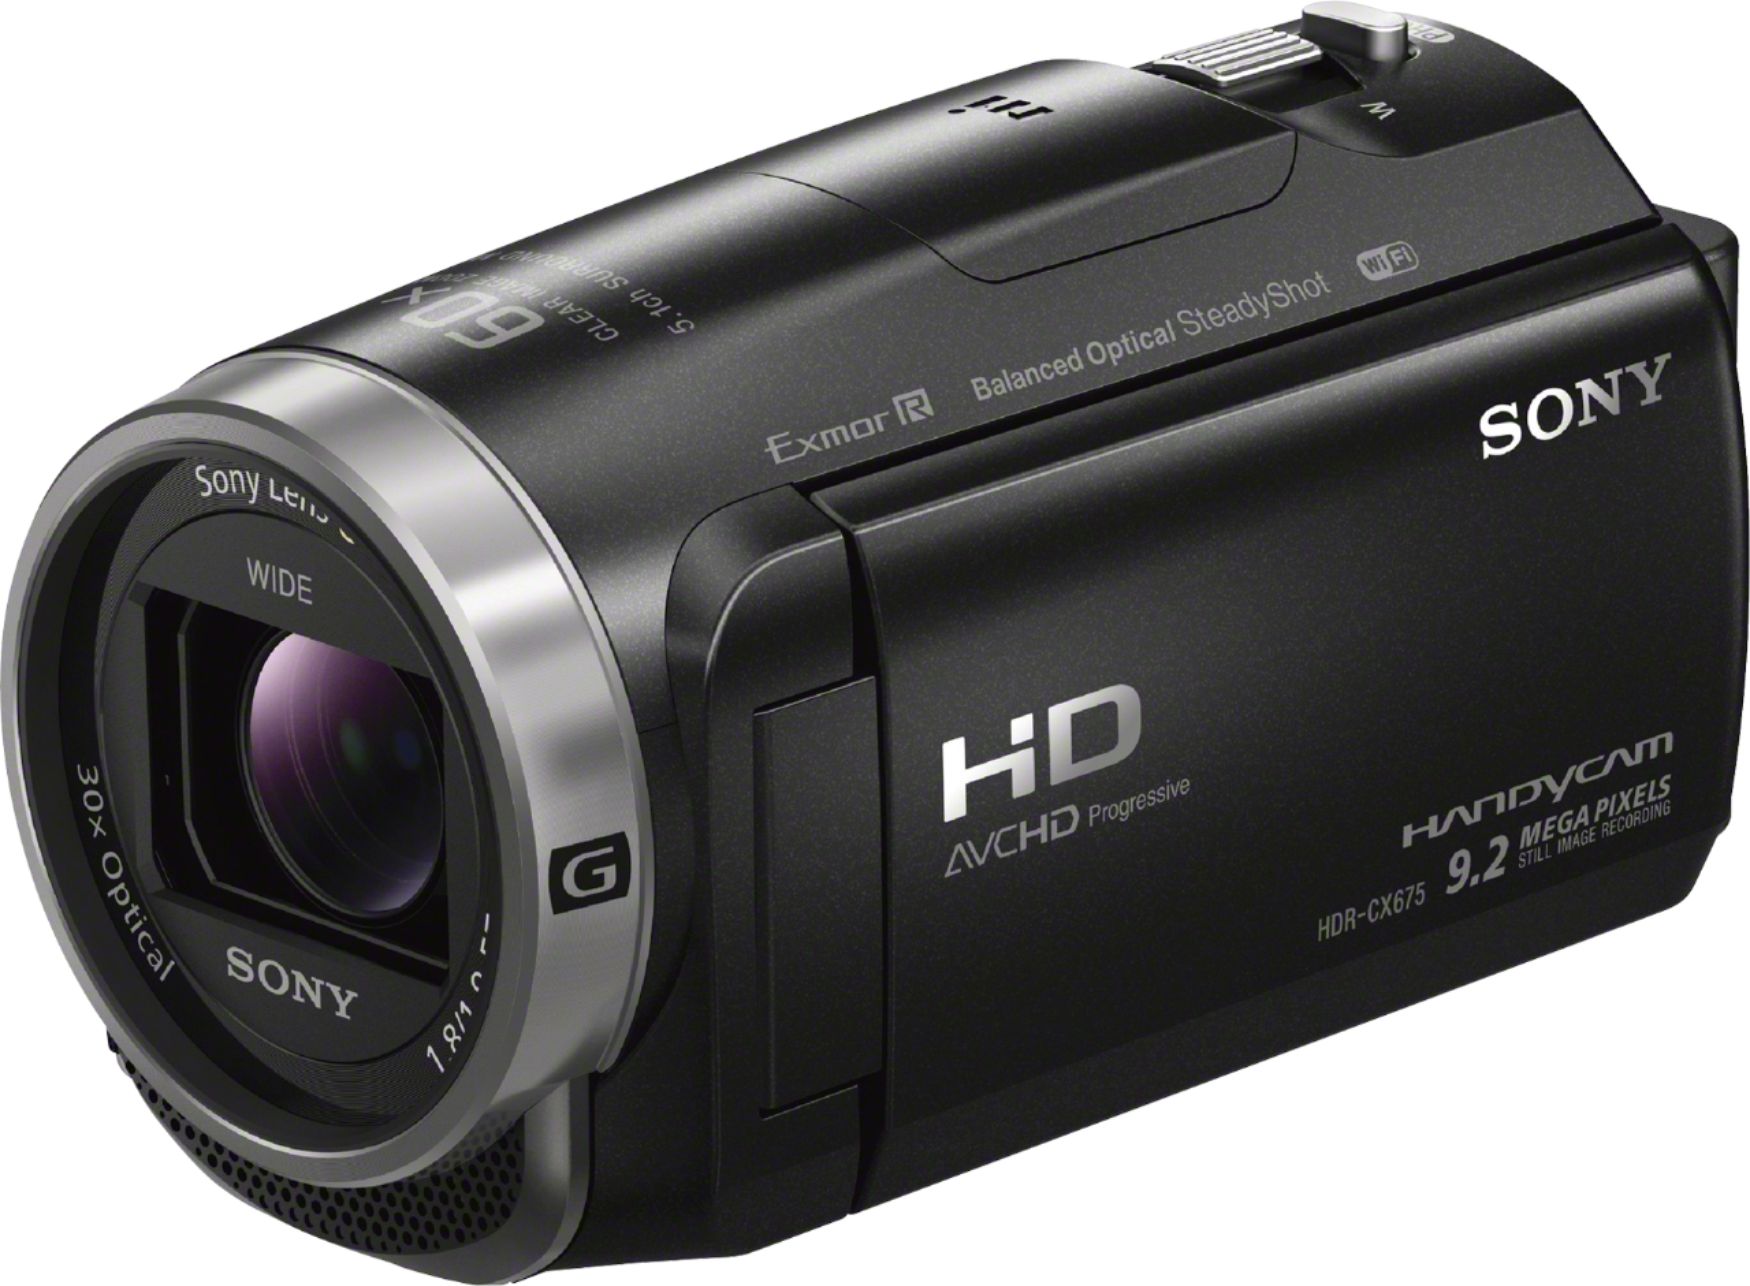 Sony Handycam Cx675 32gb Flash Memory Camcorder Black Hdrcx675 B